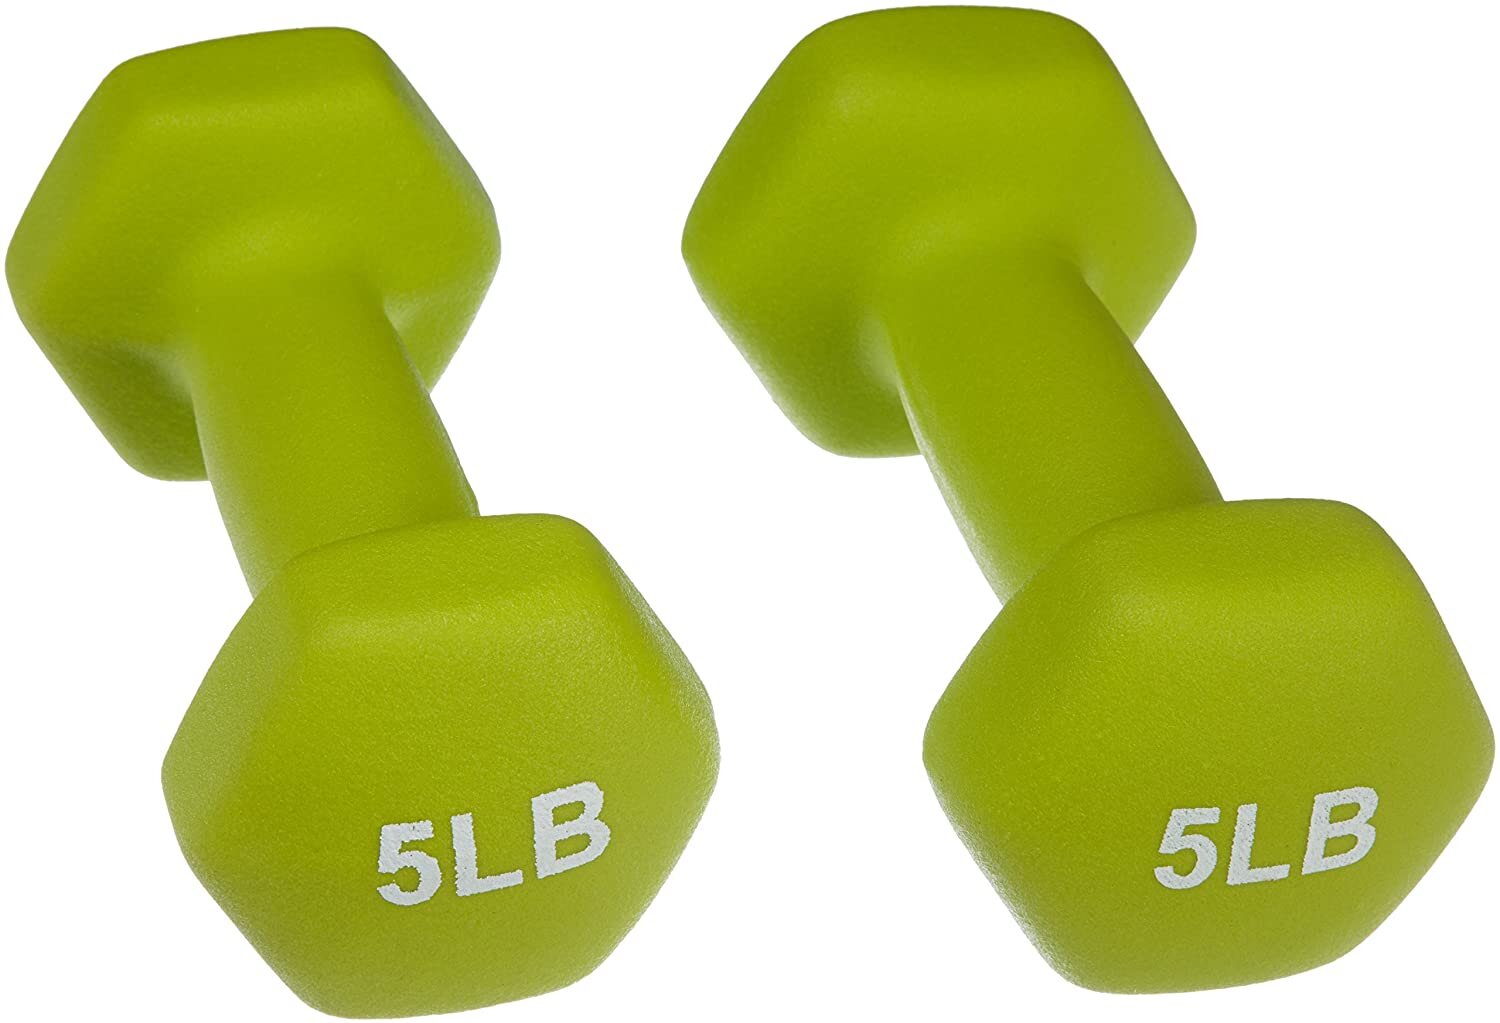 5 lb neoprene hand weights